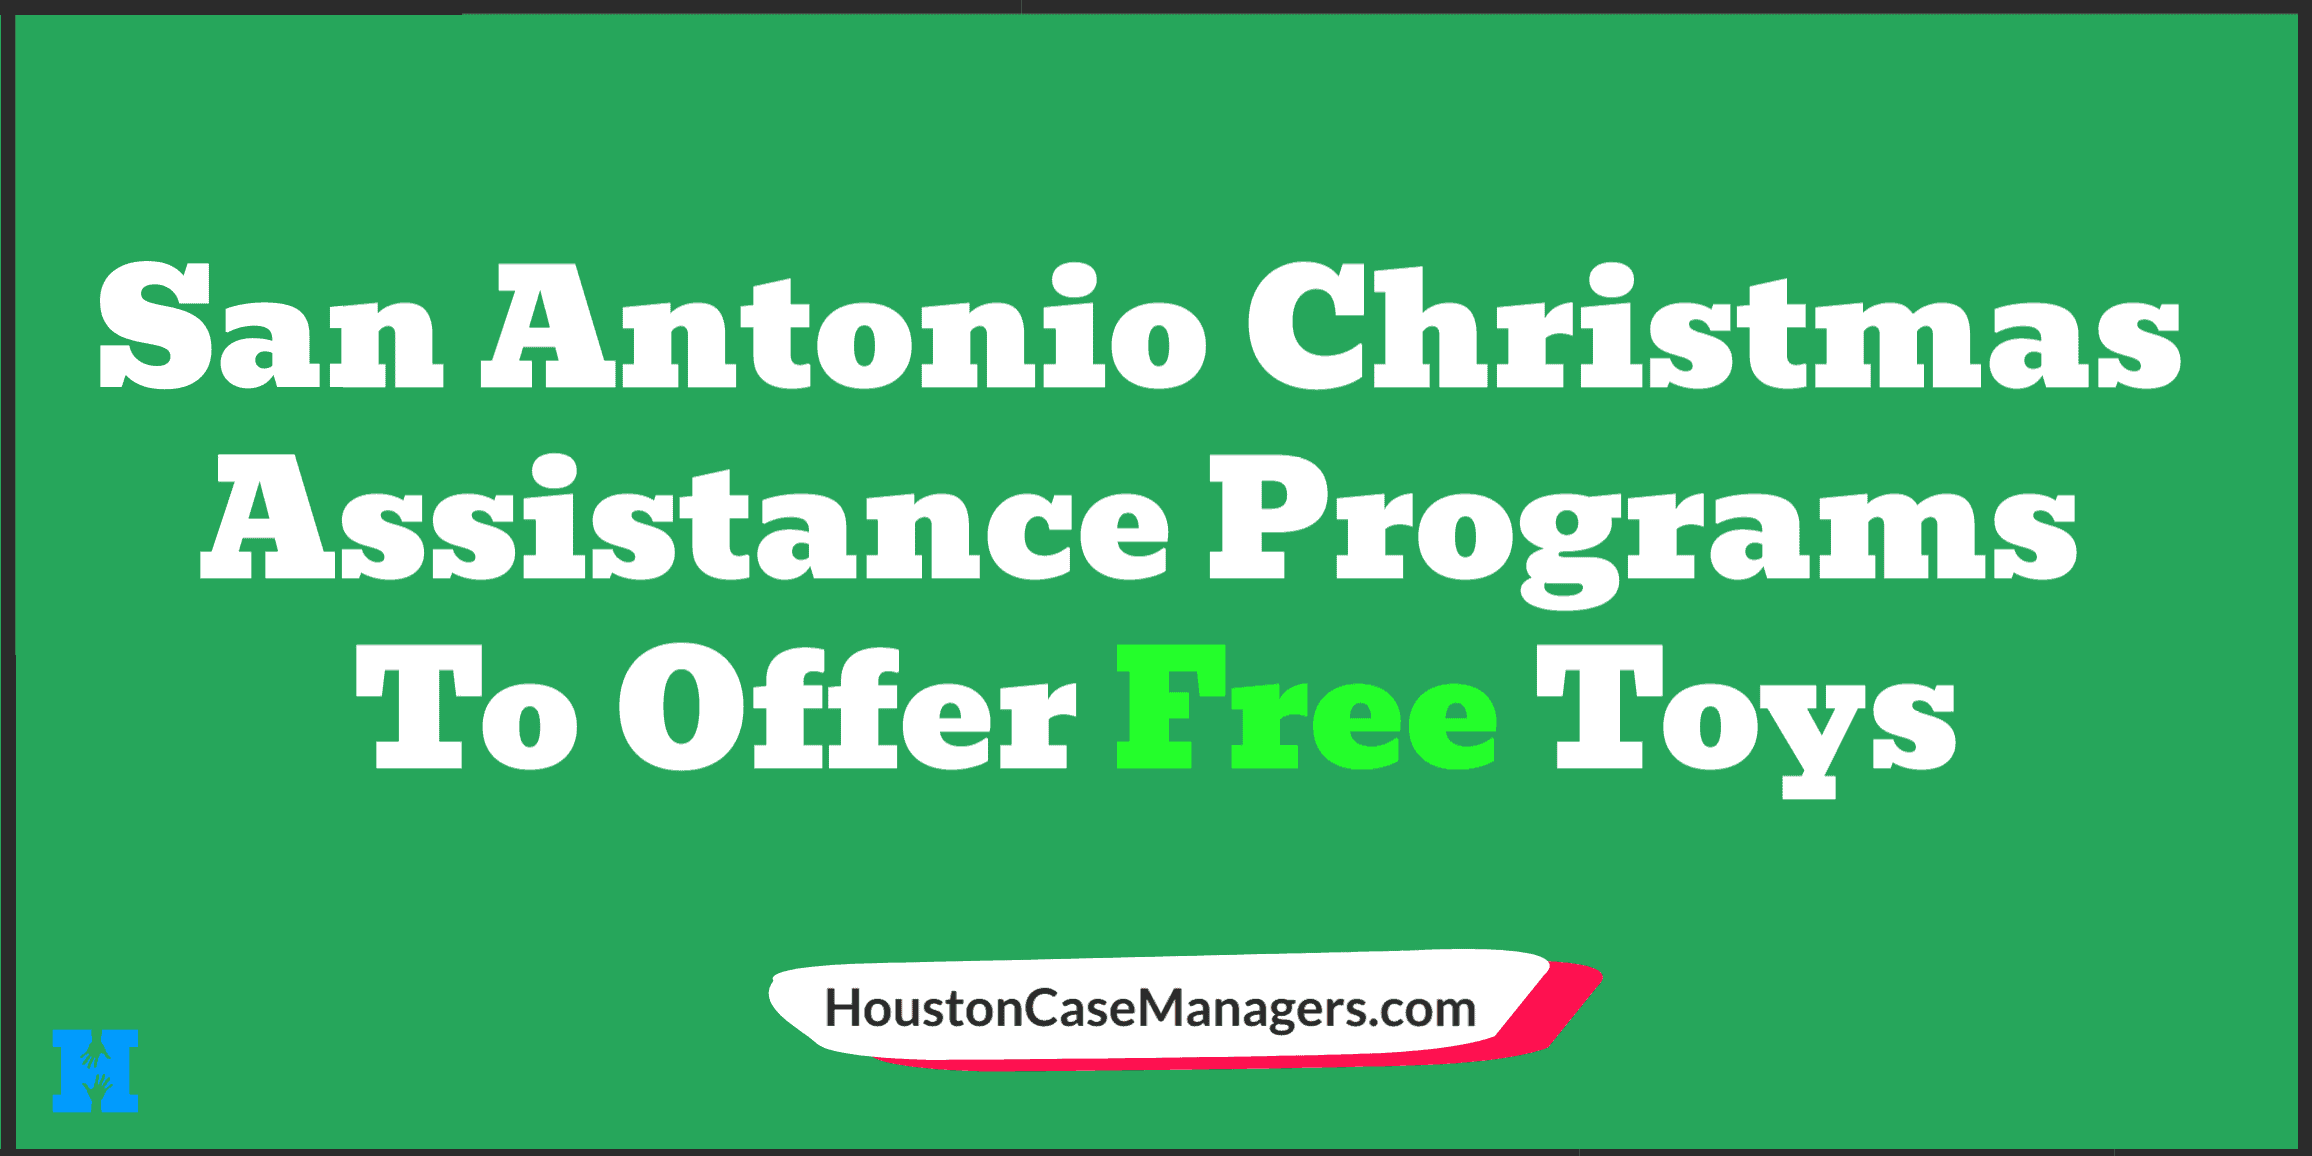 San Antonio Christmas Assistance